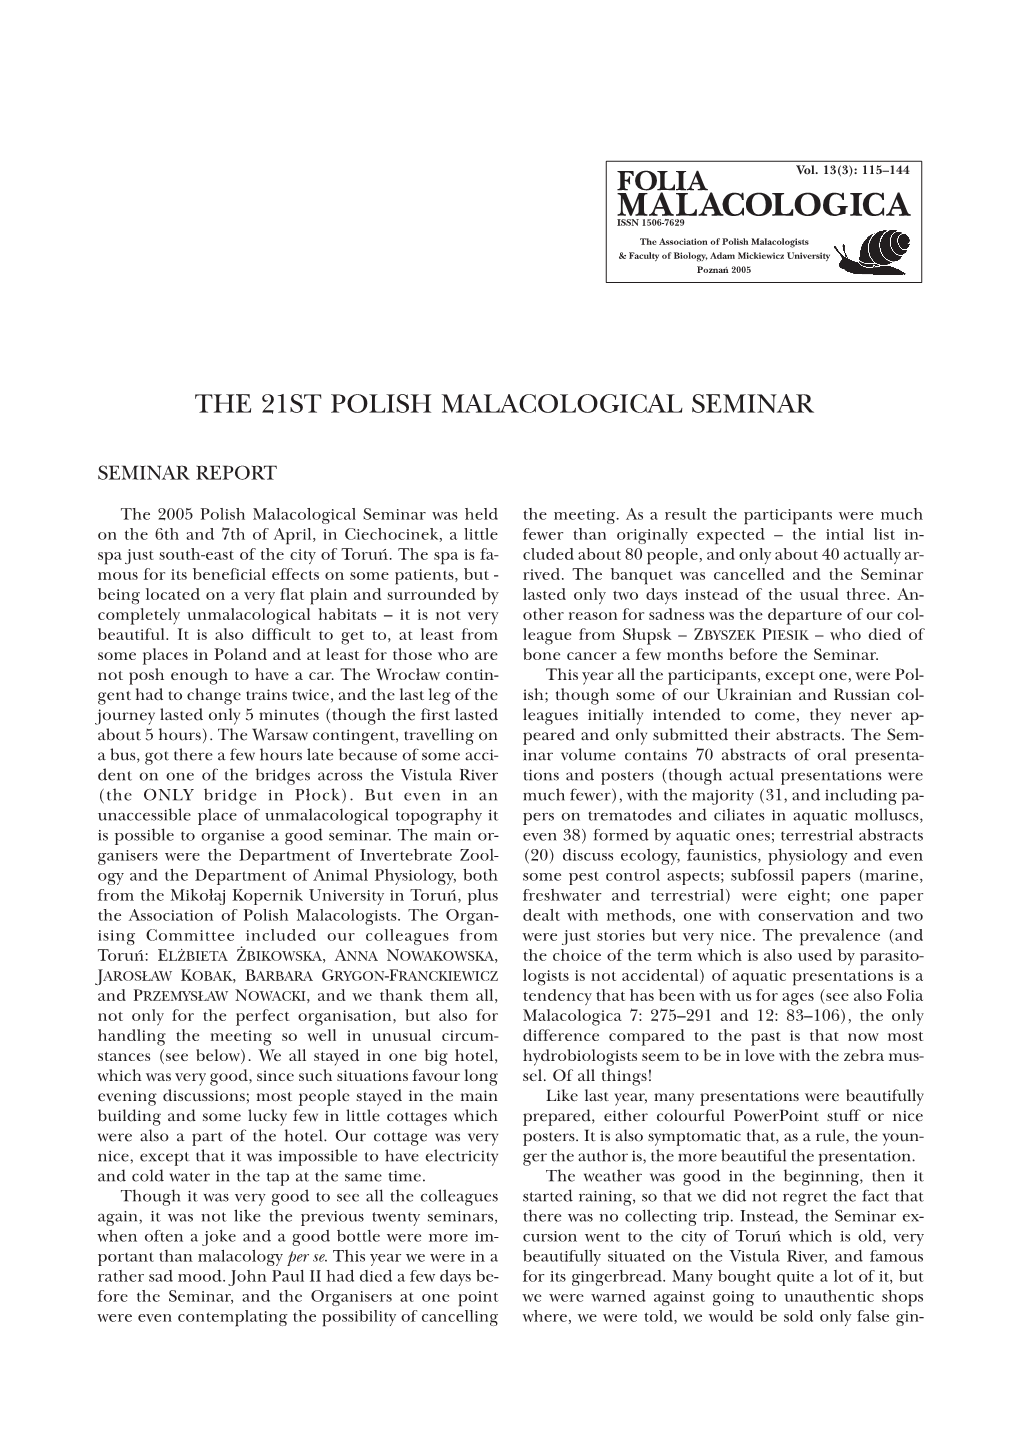 The 21St Polish Malacological Seminar